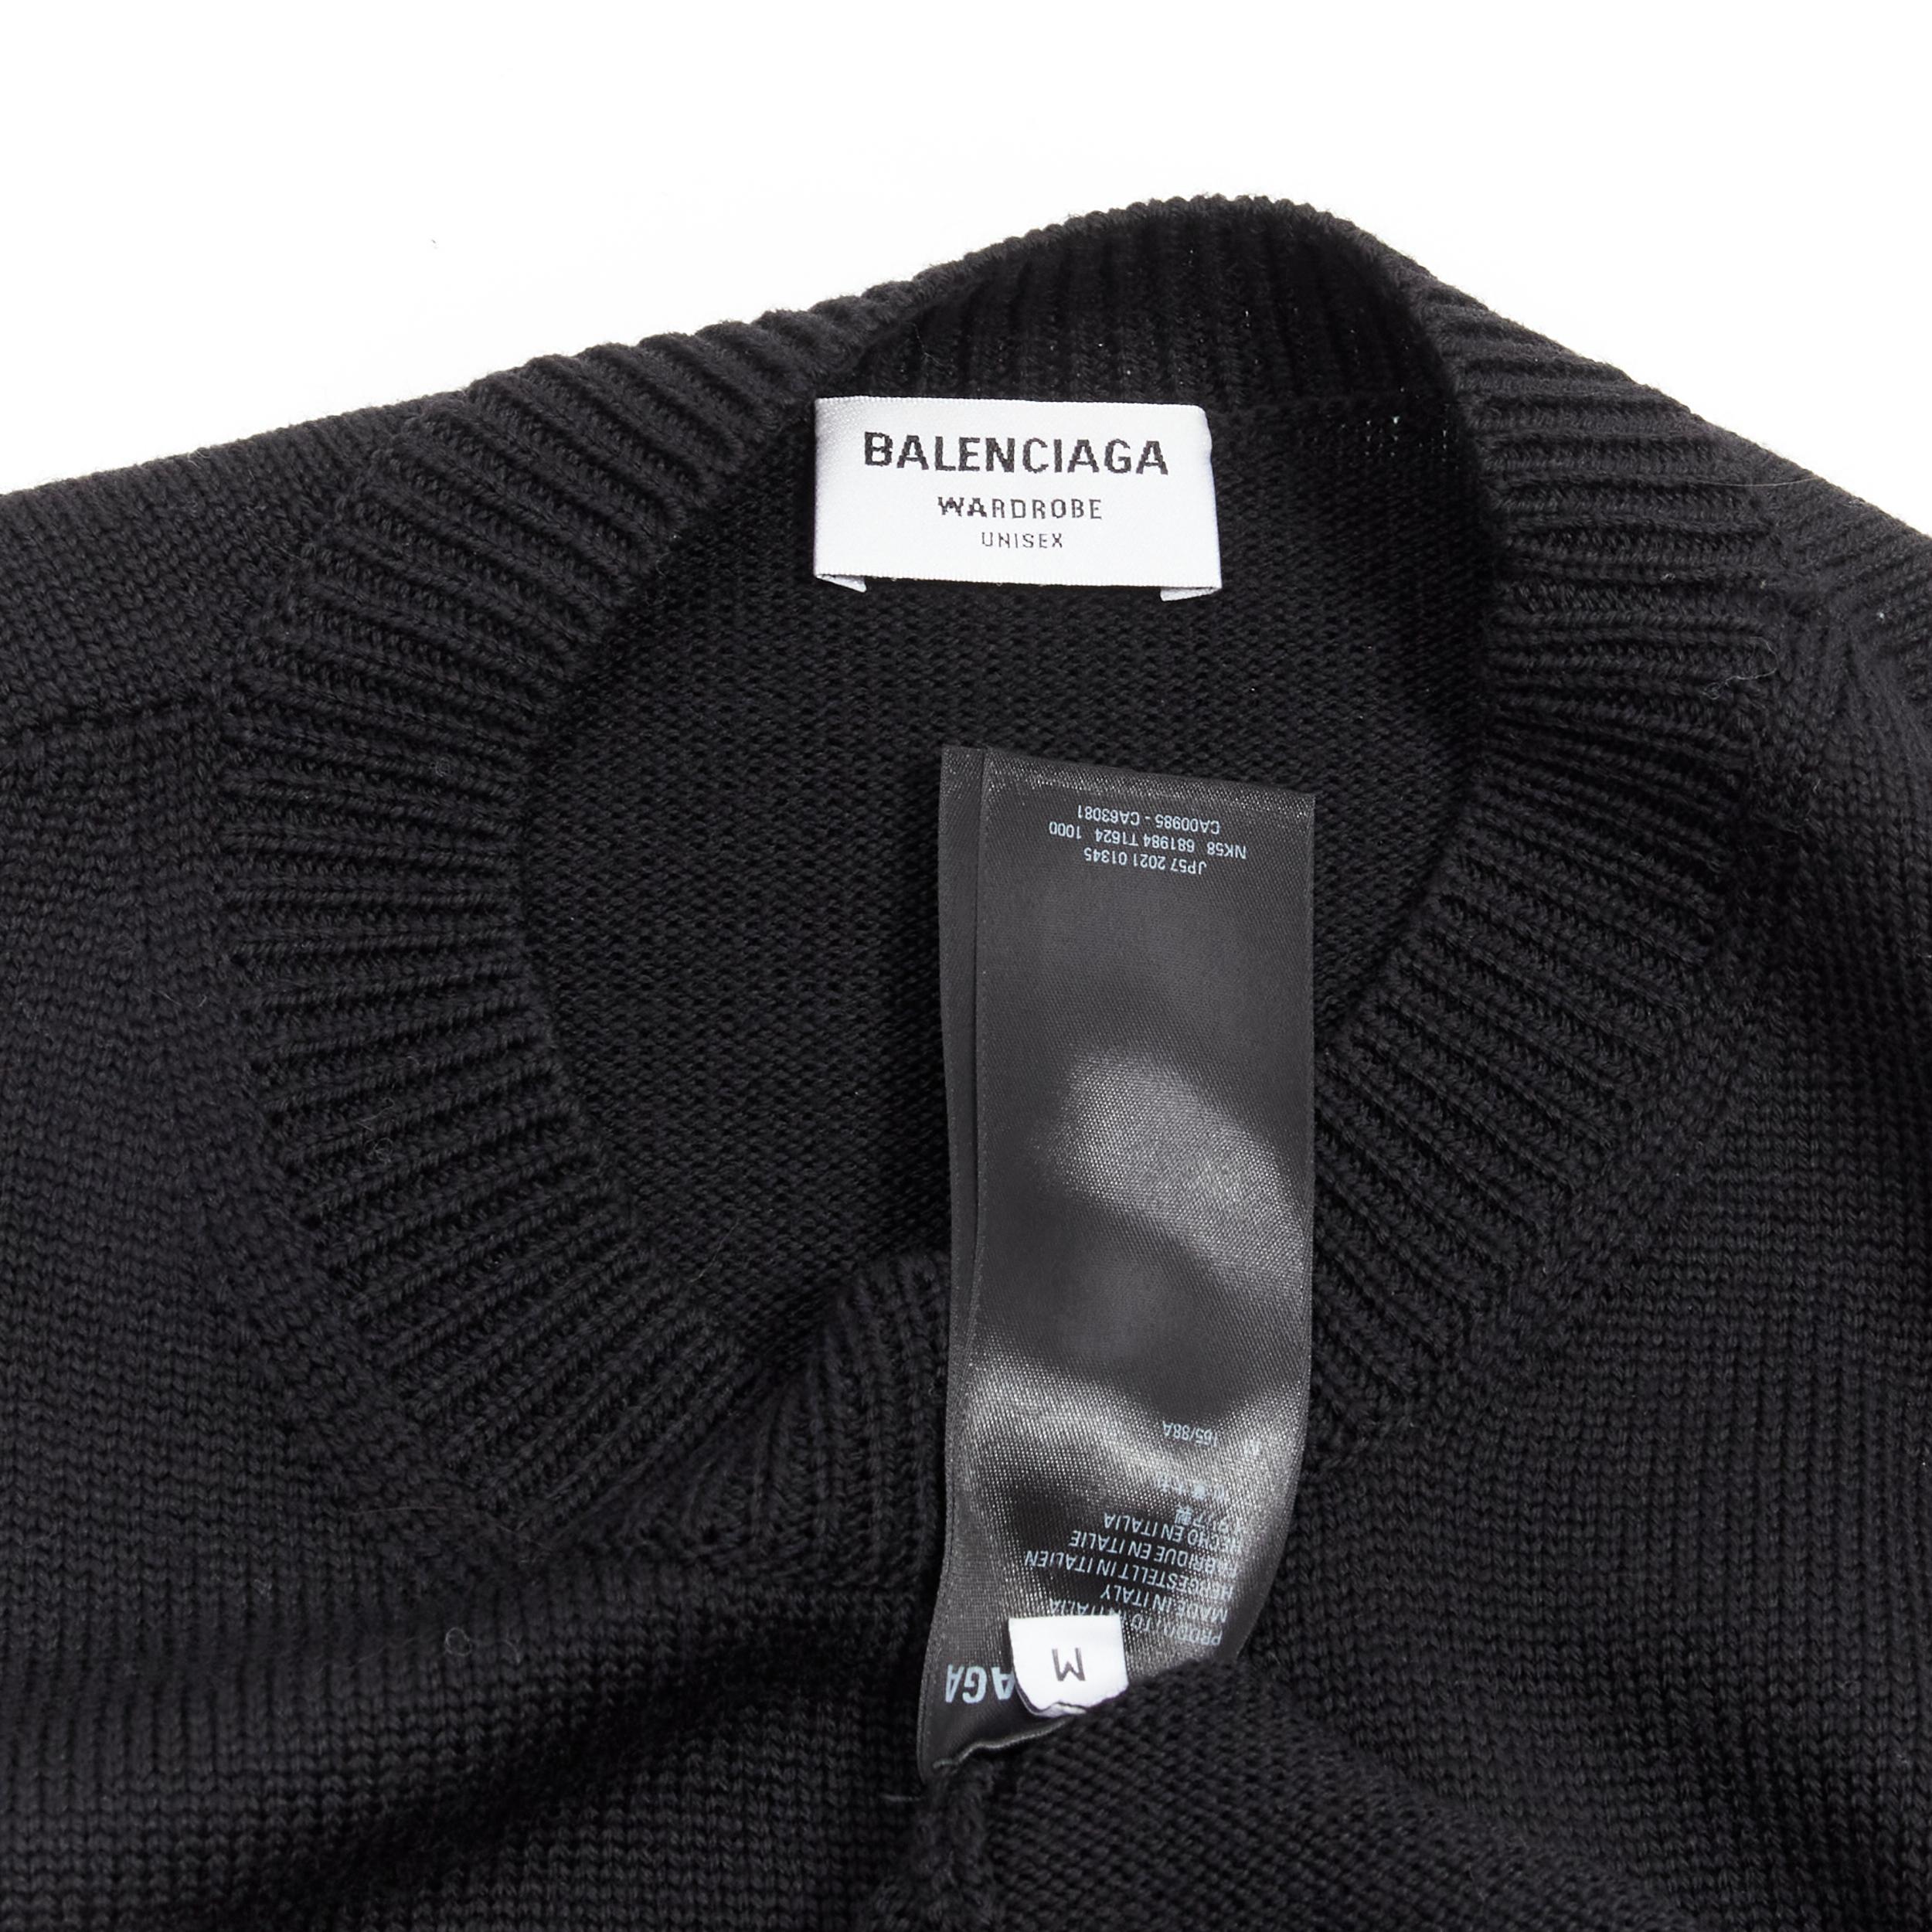 BALENCIAGA Demna 2021 Unisex Wardrobe Paris Cities black virgin wool sweater M 4